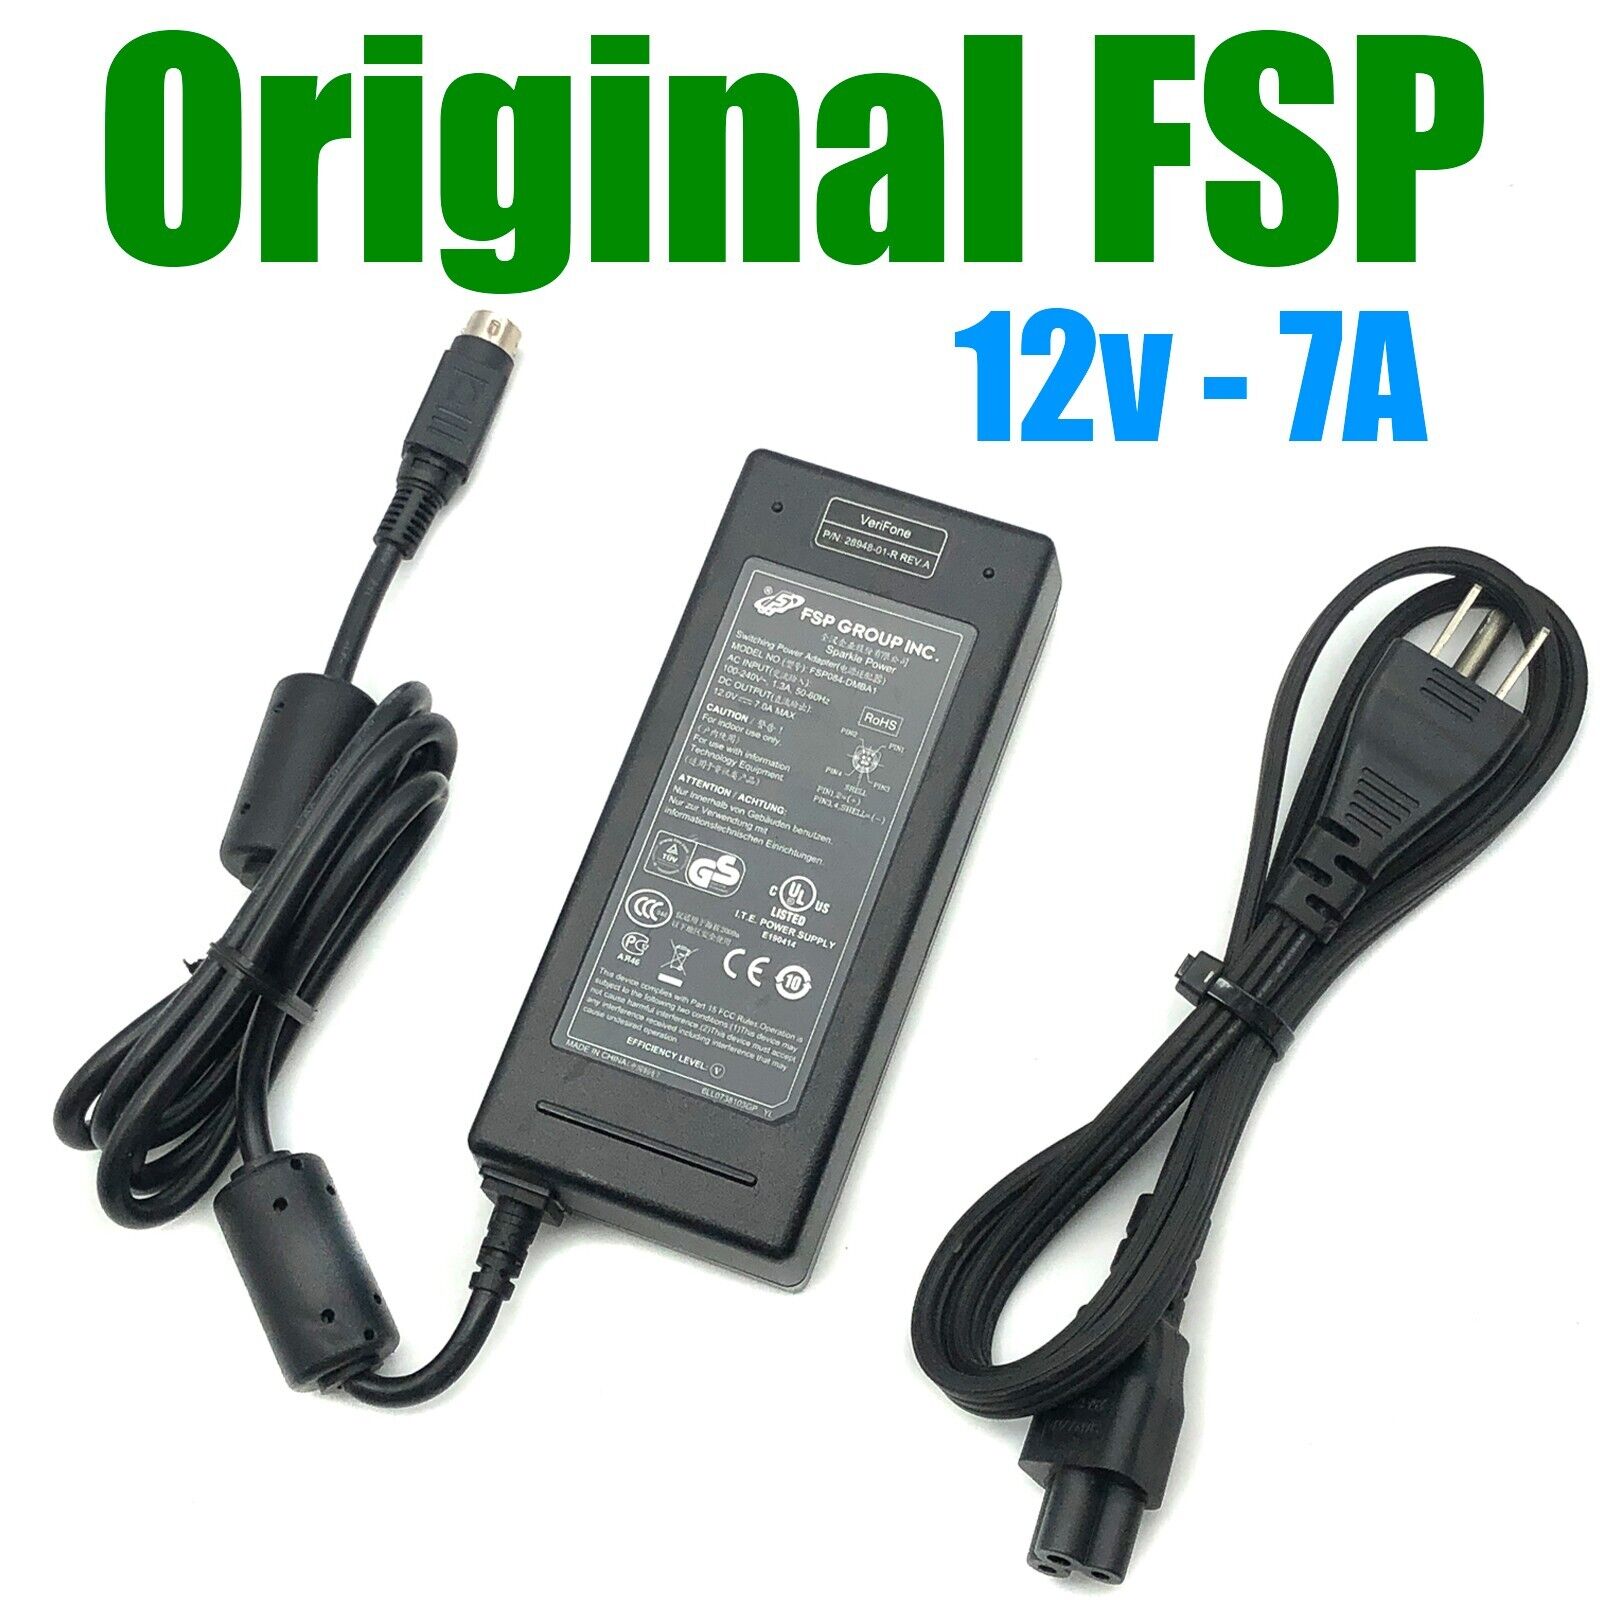 *Brand NEW*Genuine FSP FSP084-DMBA1 12V 7A 84W AC/DC Power Supply